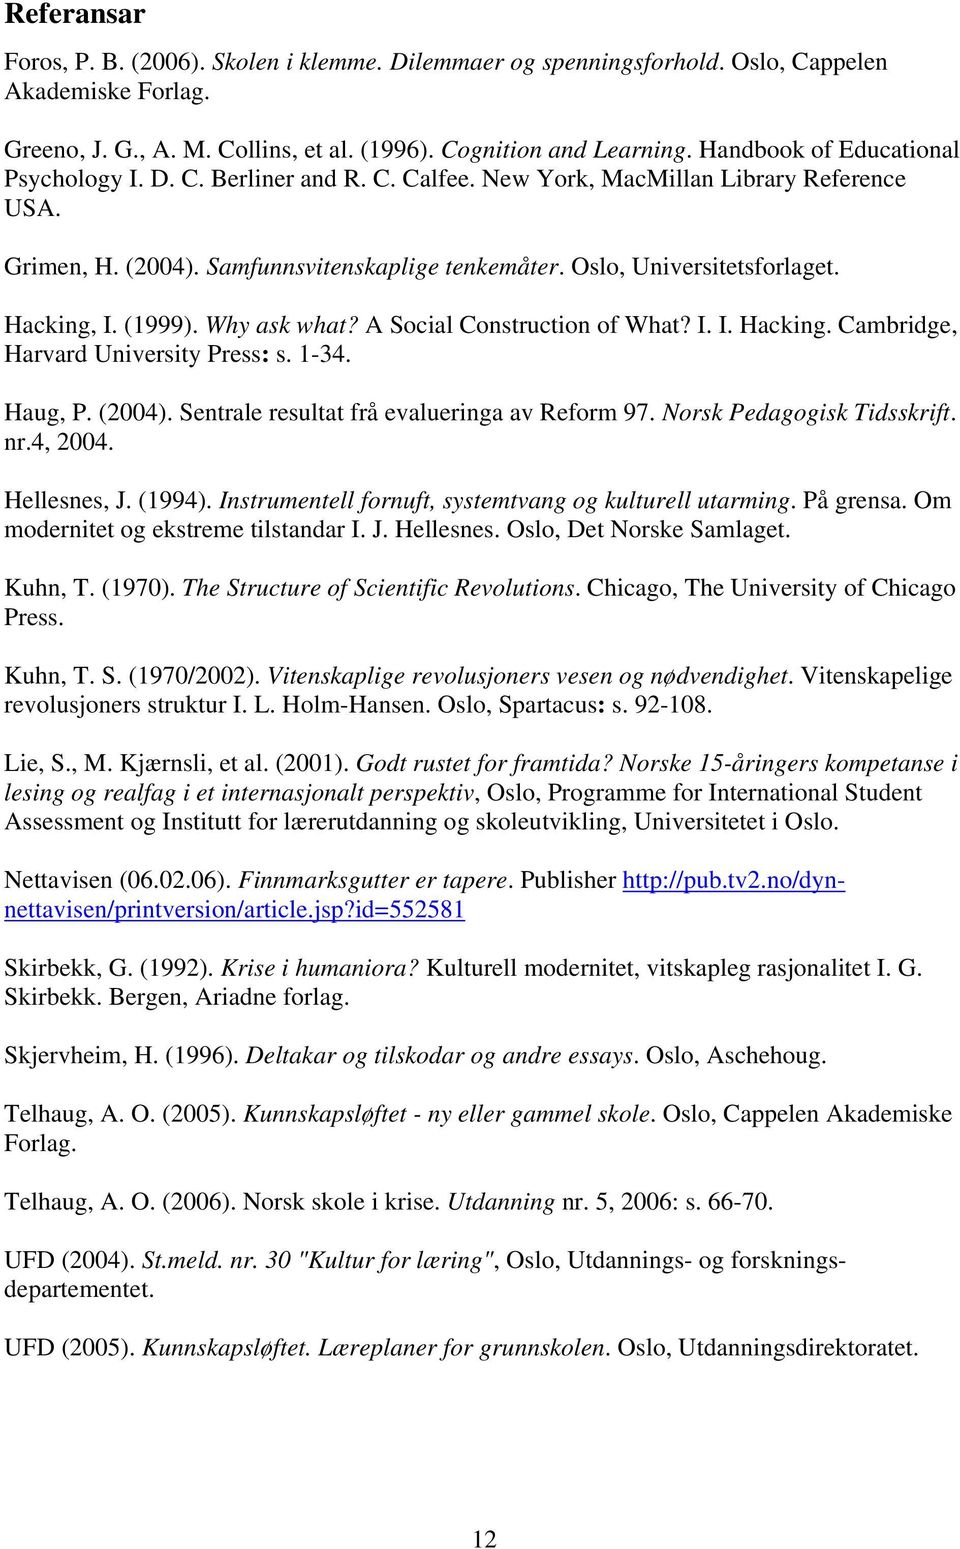 Hacking, I. (1999). Why ask what? A Social Construction of What? I. I. Hacking. Cambridge, Harvard University Press: s. 1-34. Haug, P. (2004). Sentrale resultat frå evalueringa av Reform 97.